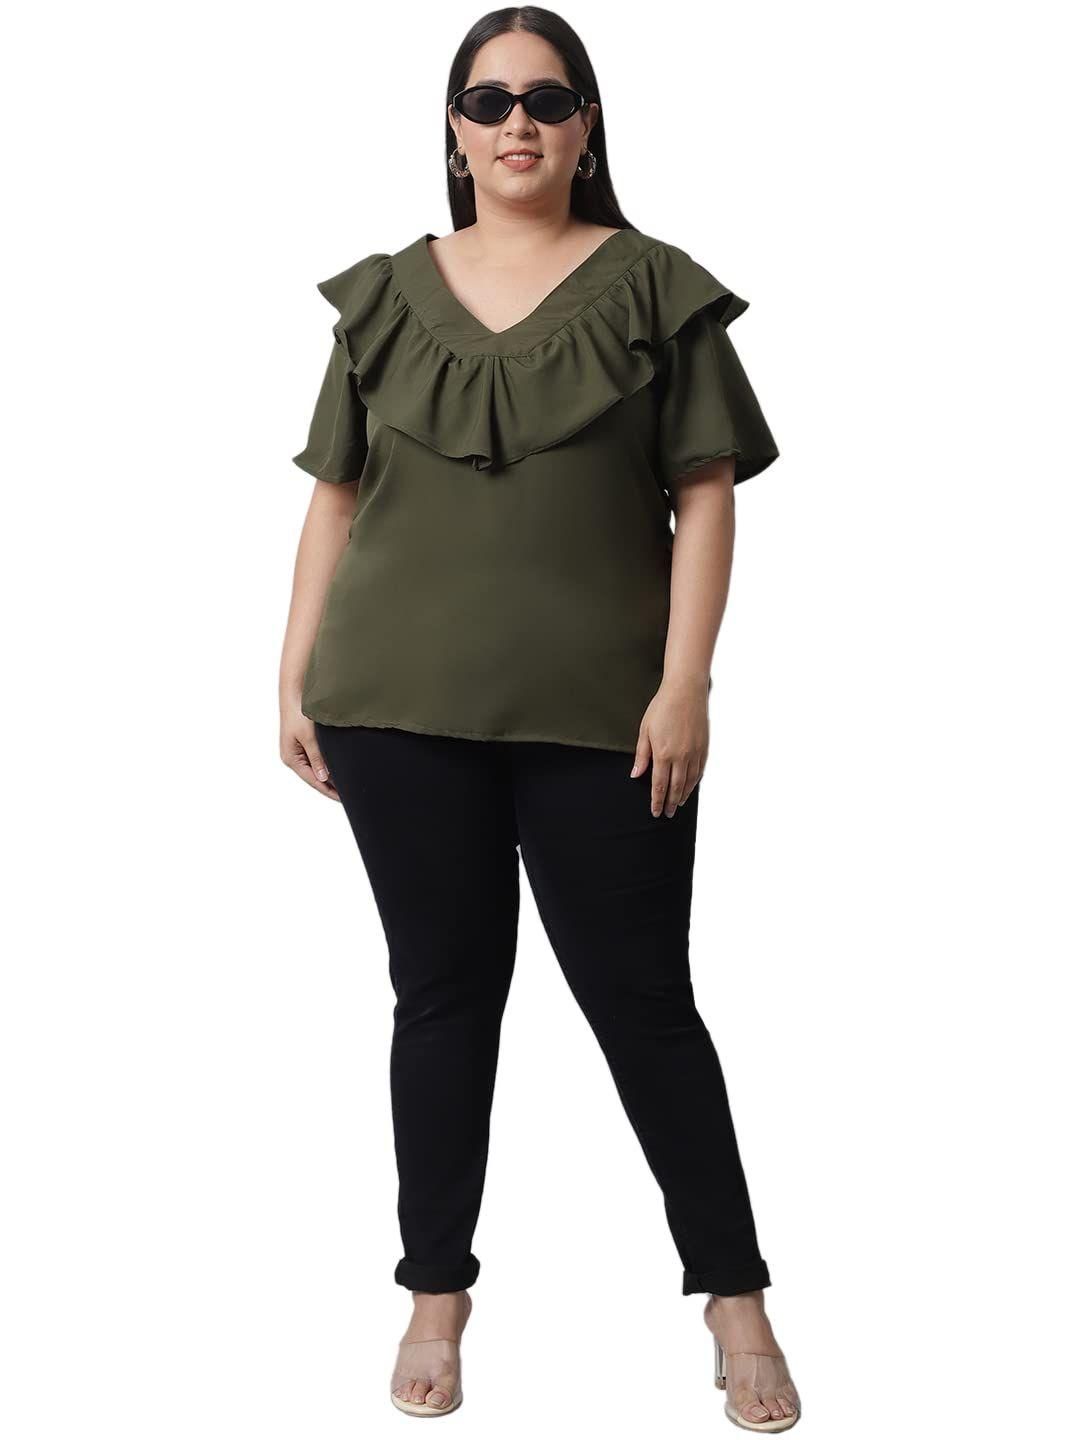 Flambeur Women's Plus Size Solid Olive Half Sleeve Top